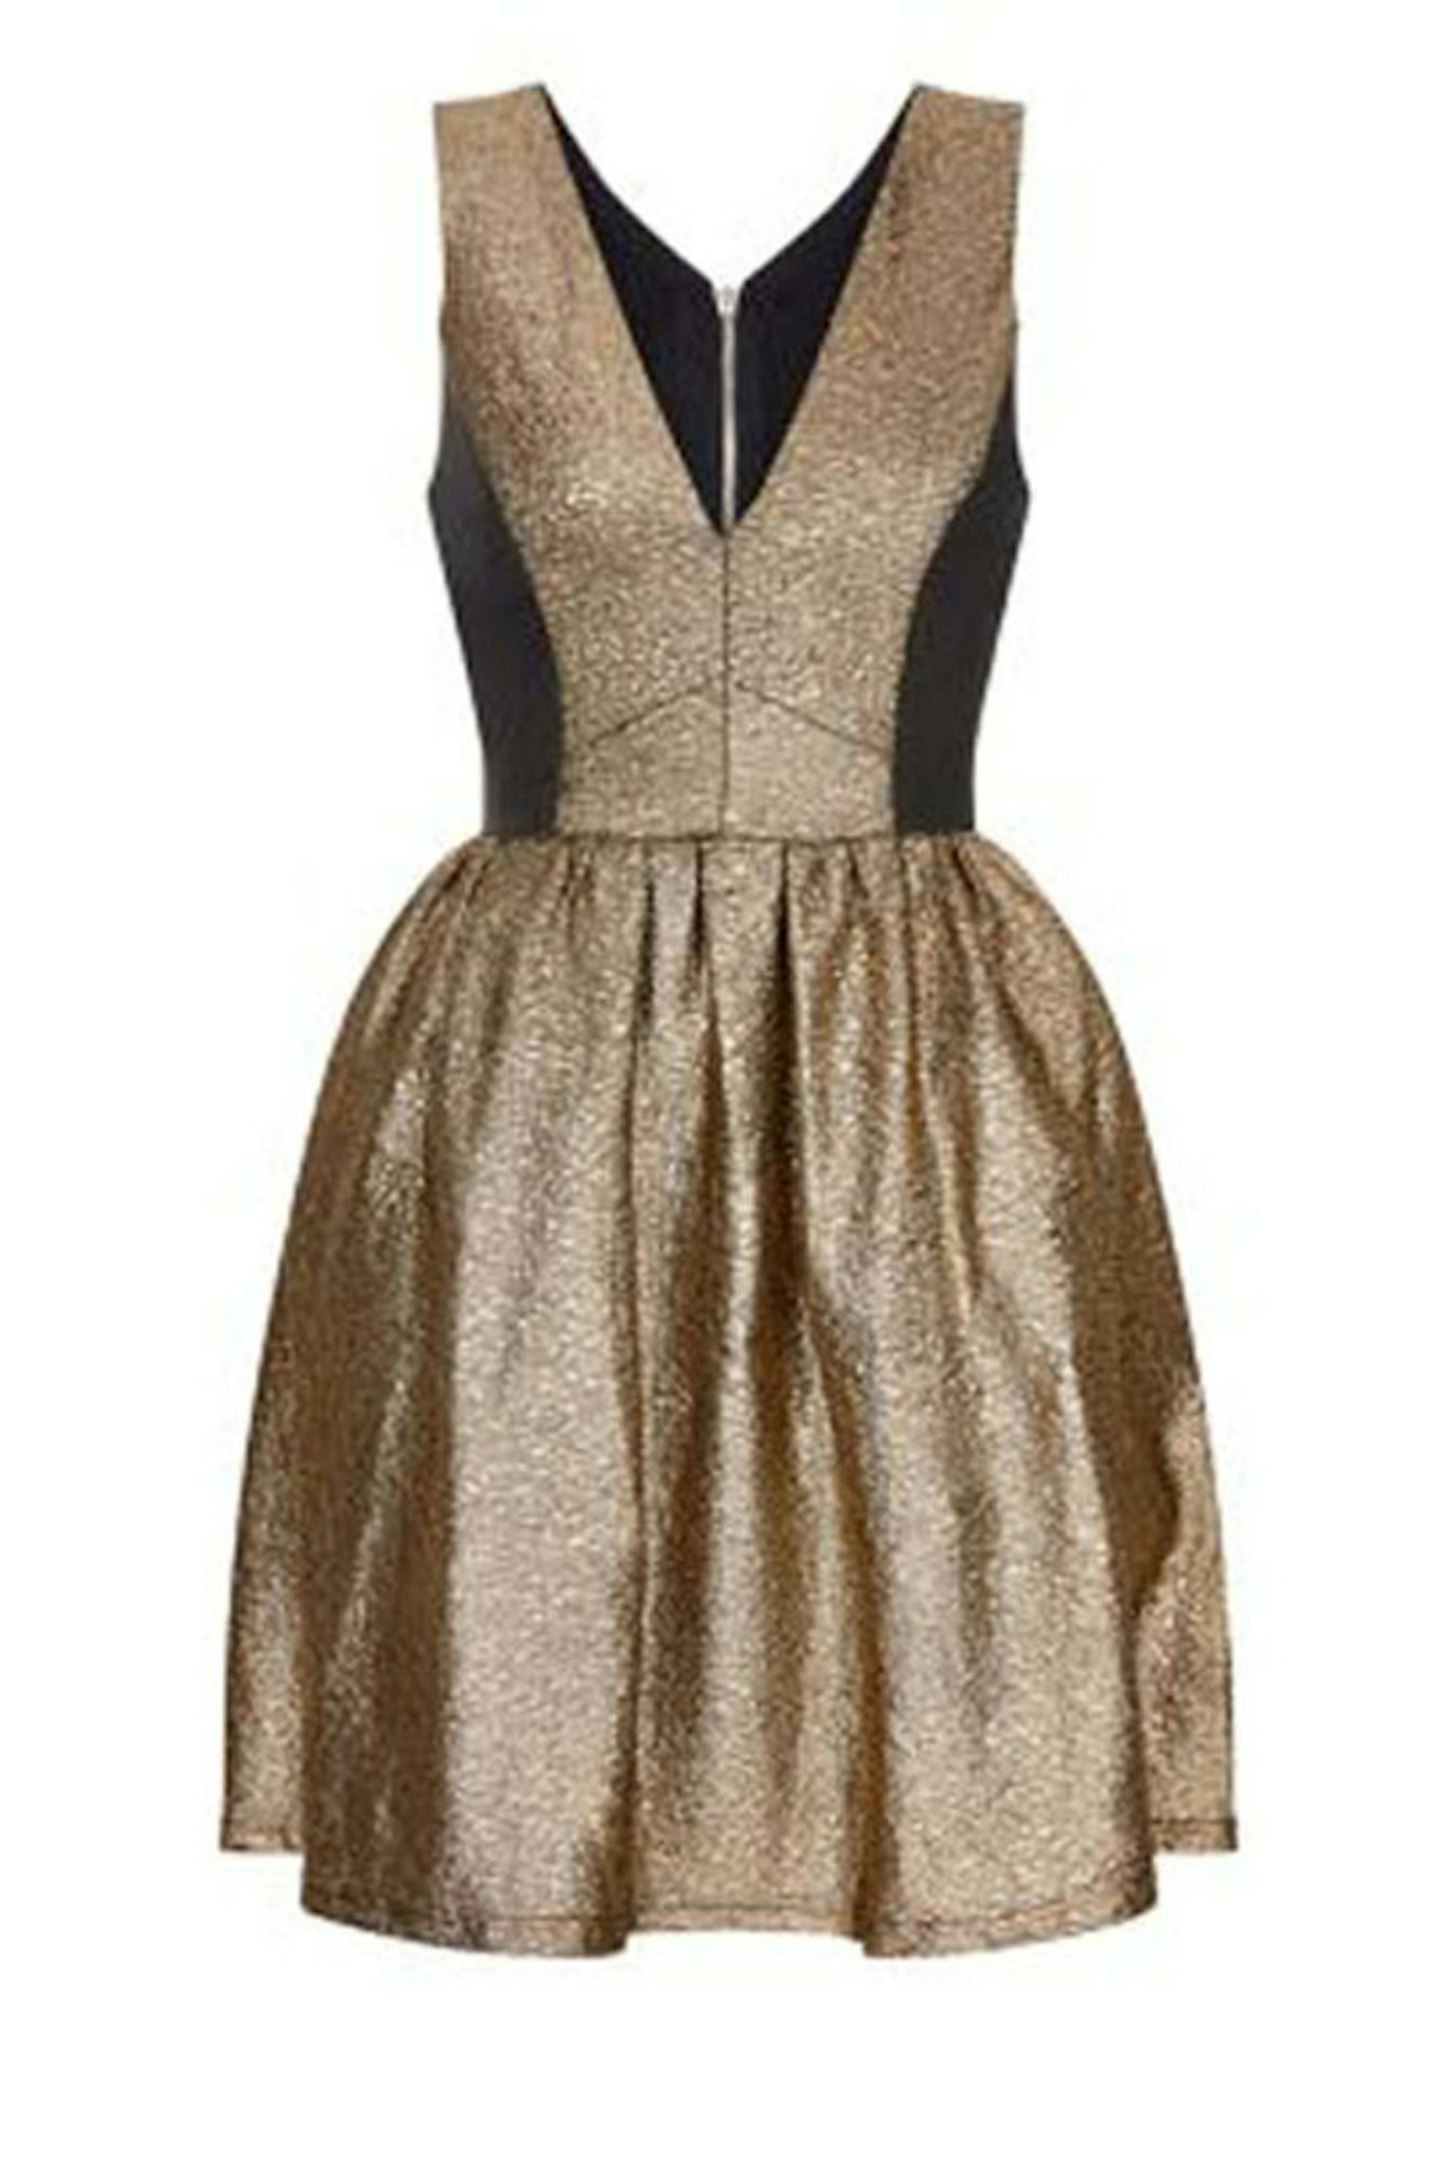 Gold metallic plunge skater dress, £34, New Look